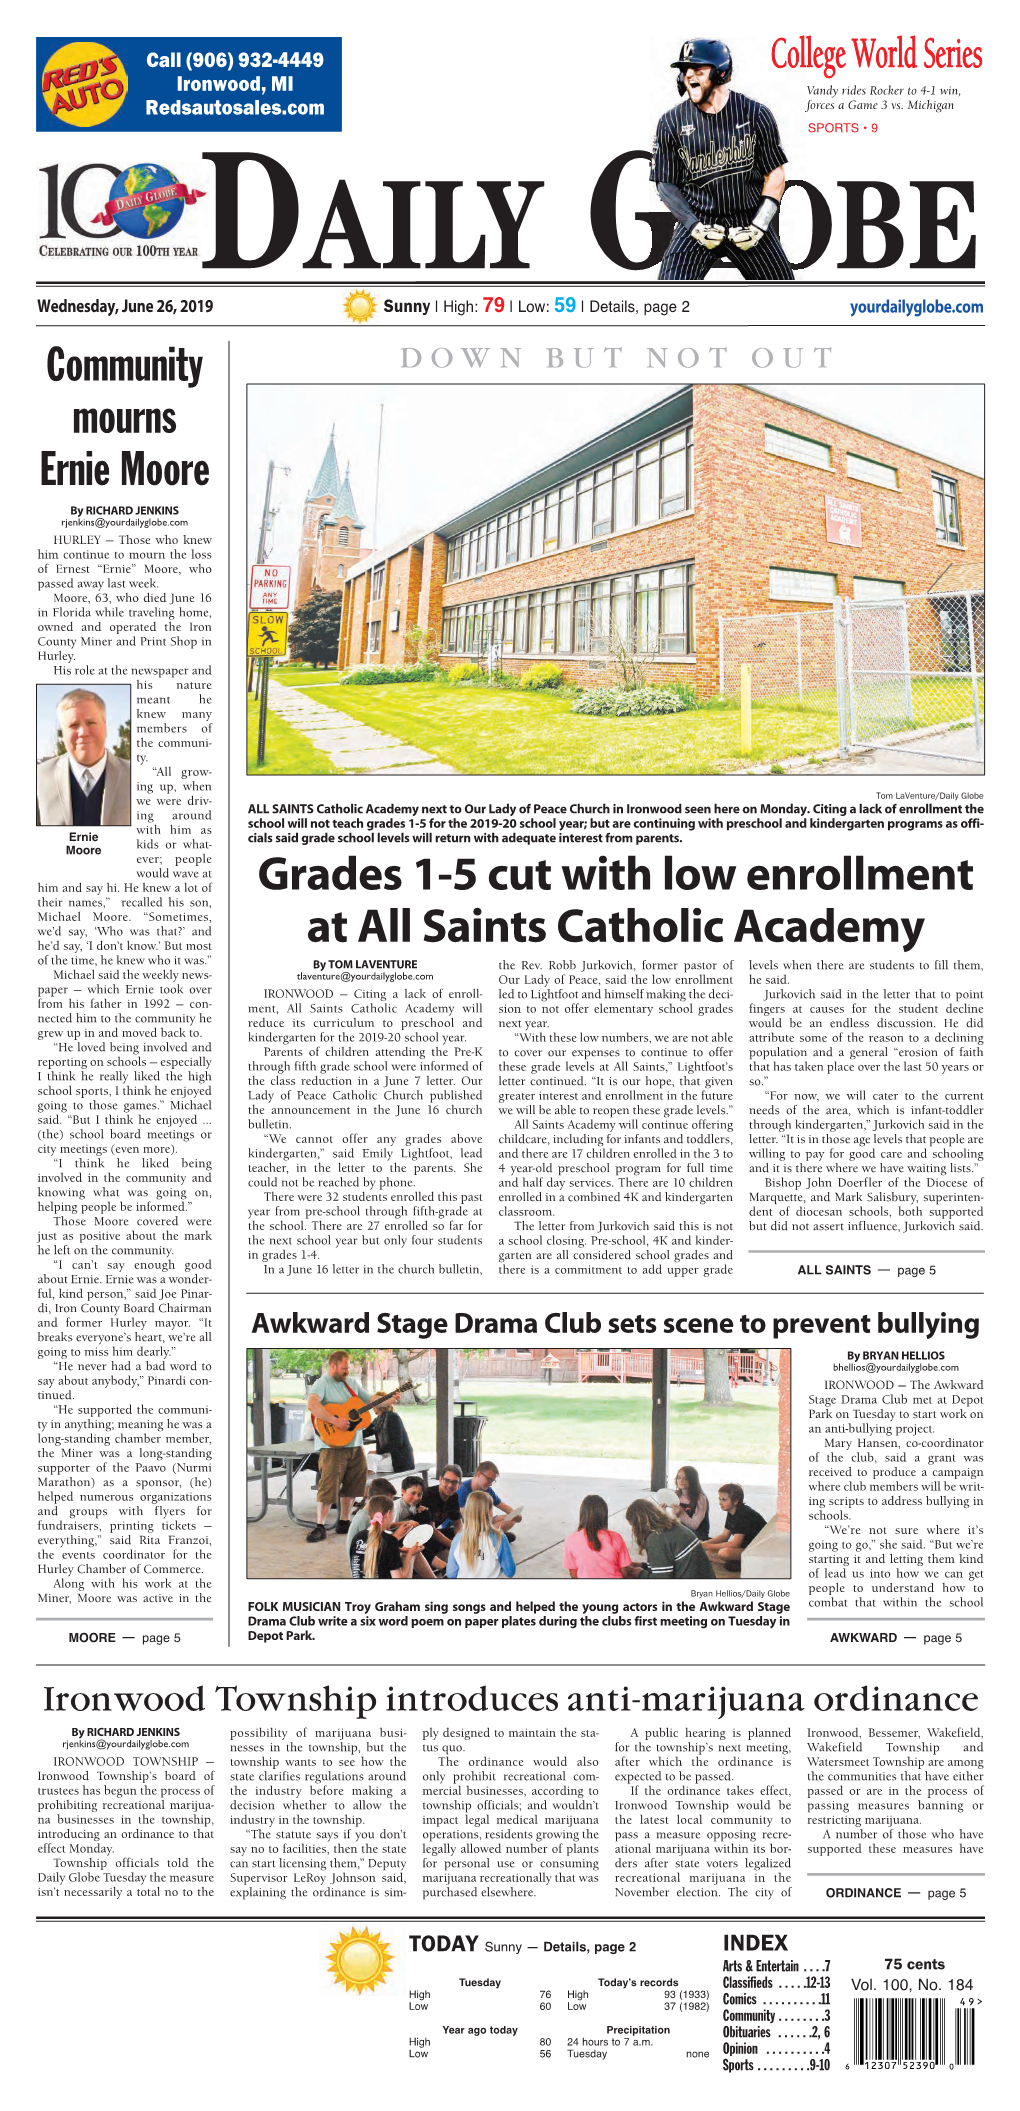 Community Mourns Ernie Moore Grades 1-5 Cut with Low Enrollment